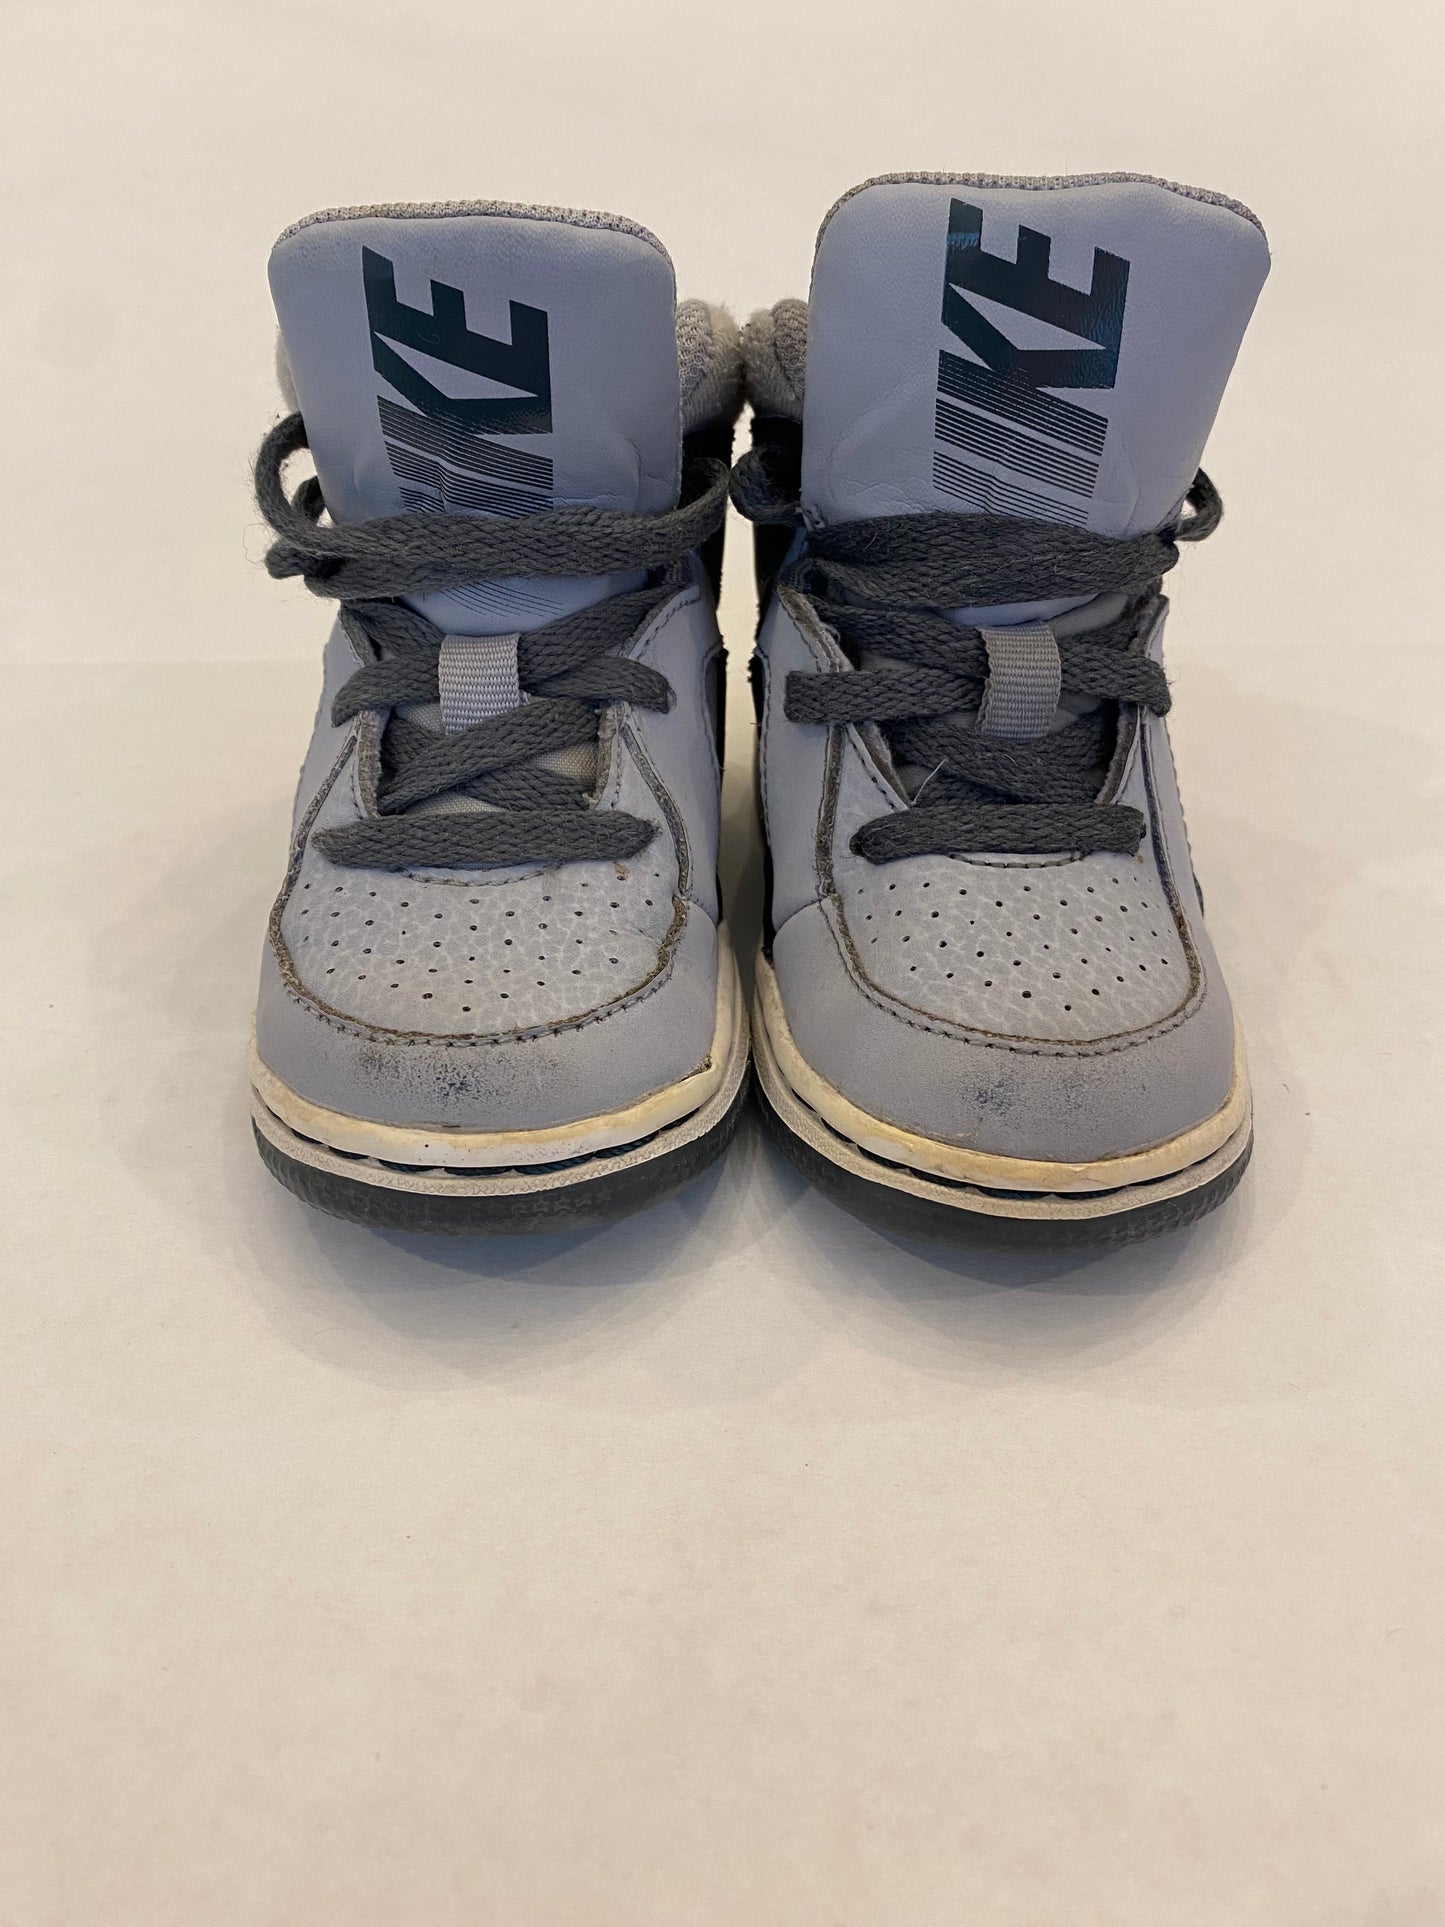 Boys 6T, Nike - hightops - gray/navy